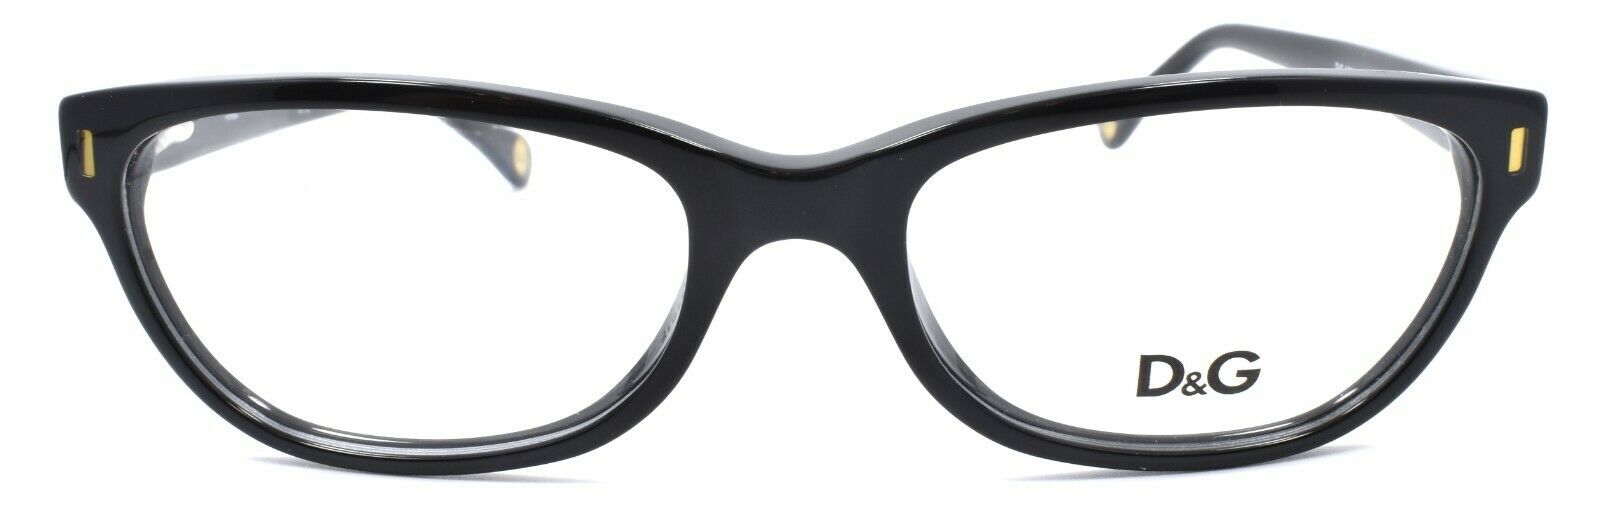 2-Dolce & Gabbana D&G 1205 501 Women's Eyeglasses Frames 52-17-135 Black-679420409399-IKSpecs